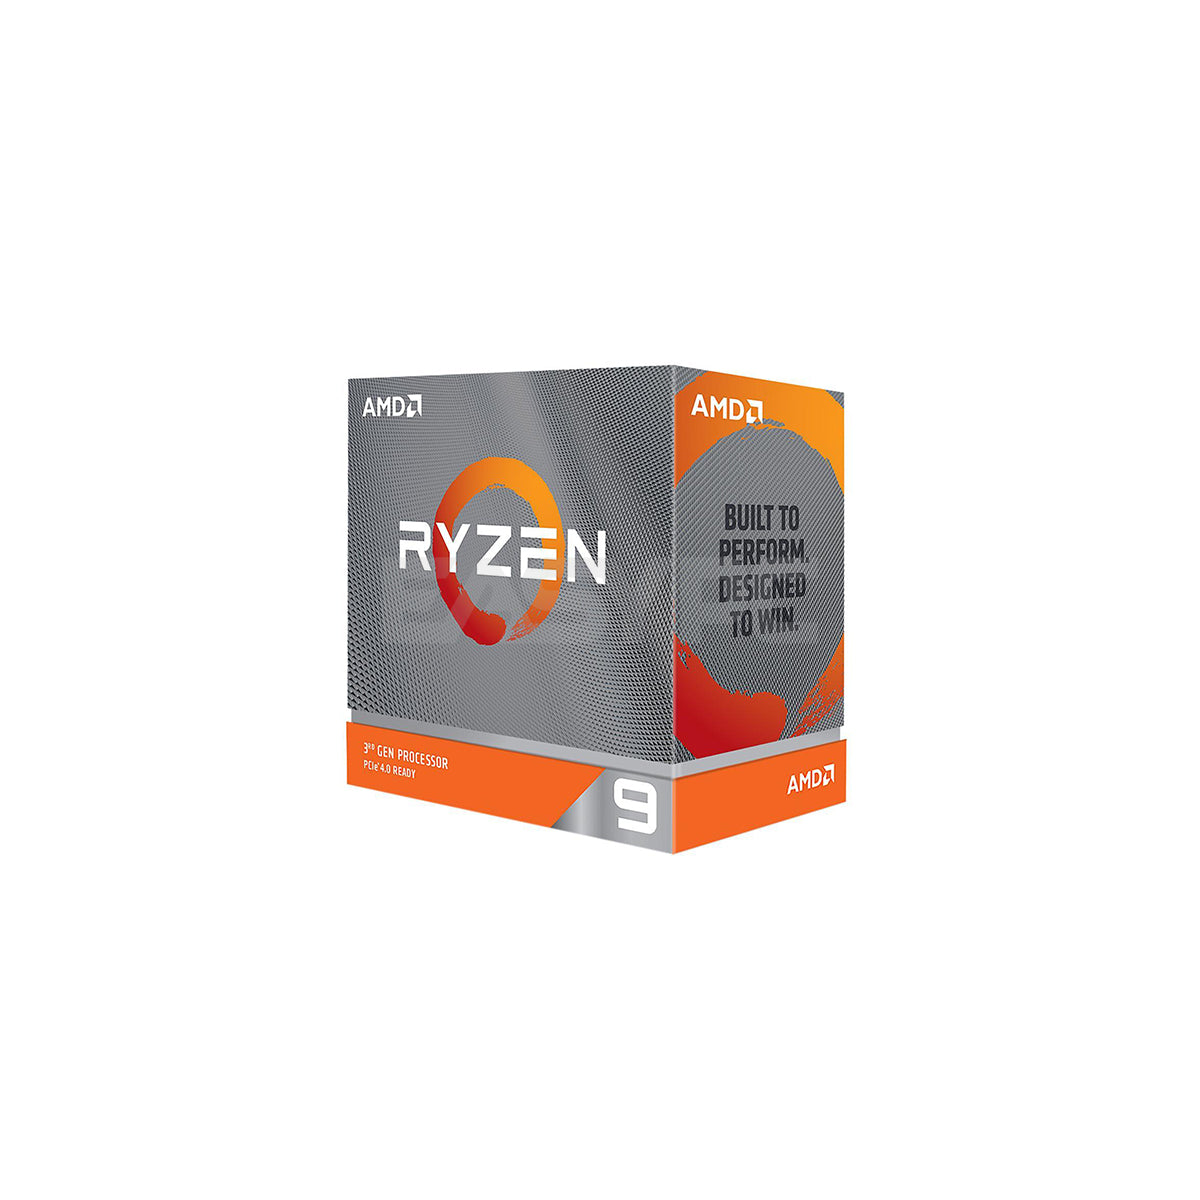 AMD Ryzen 9 3900XT-a